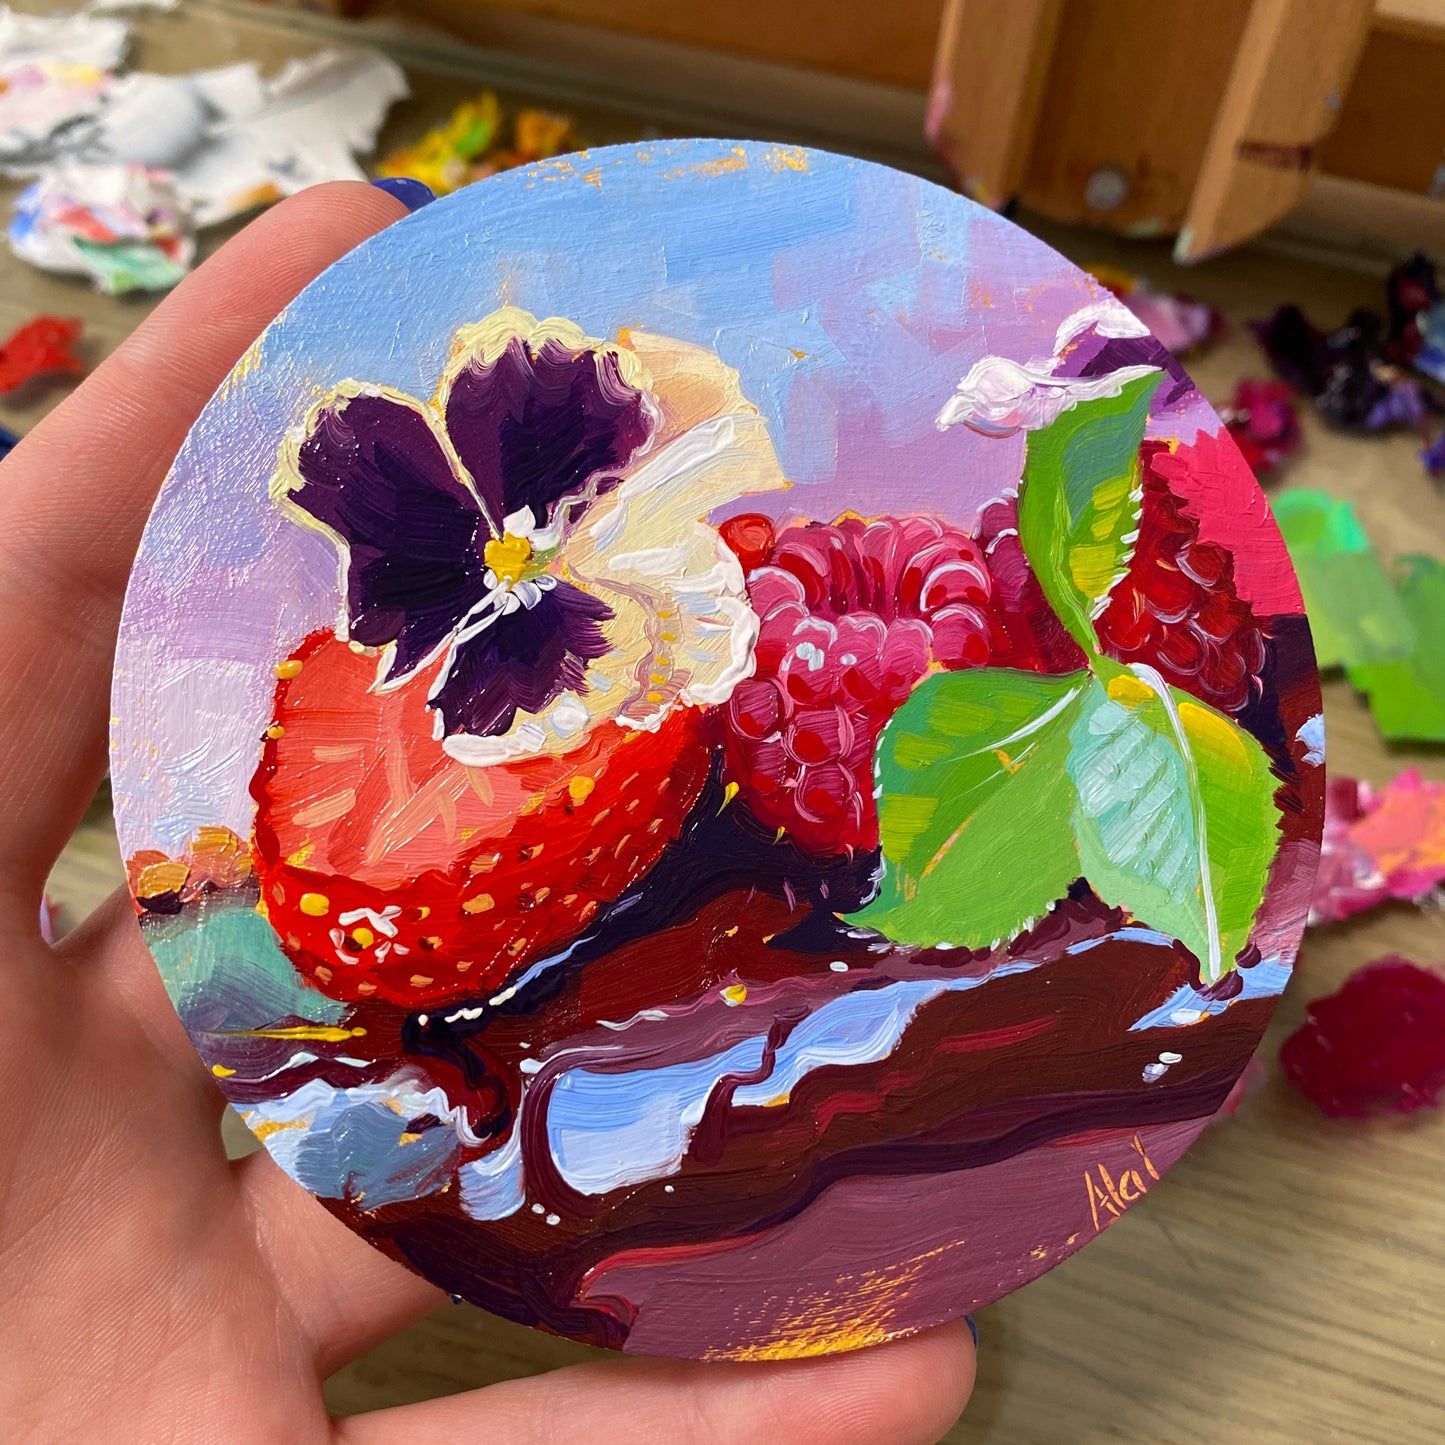 Berries and flowers - Original Oil Painting